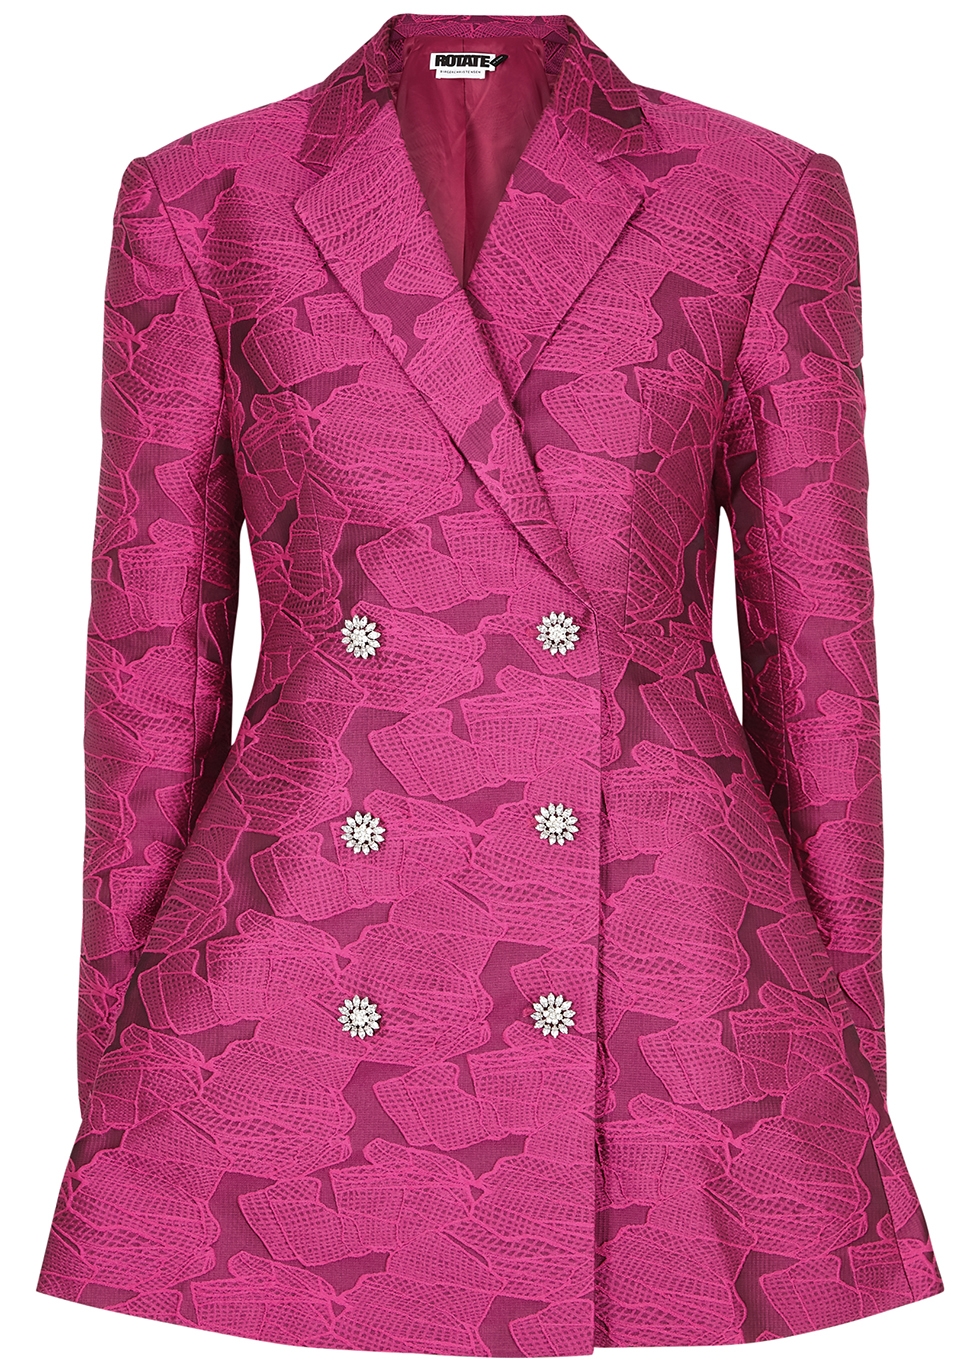 Newton dark pink jacquard blazer dress